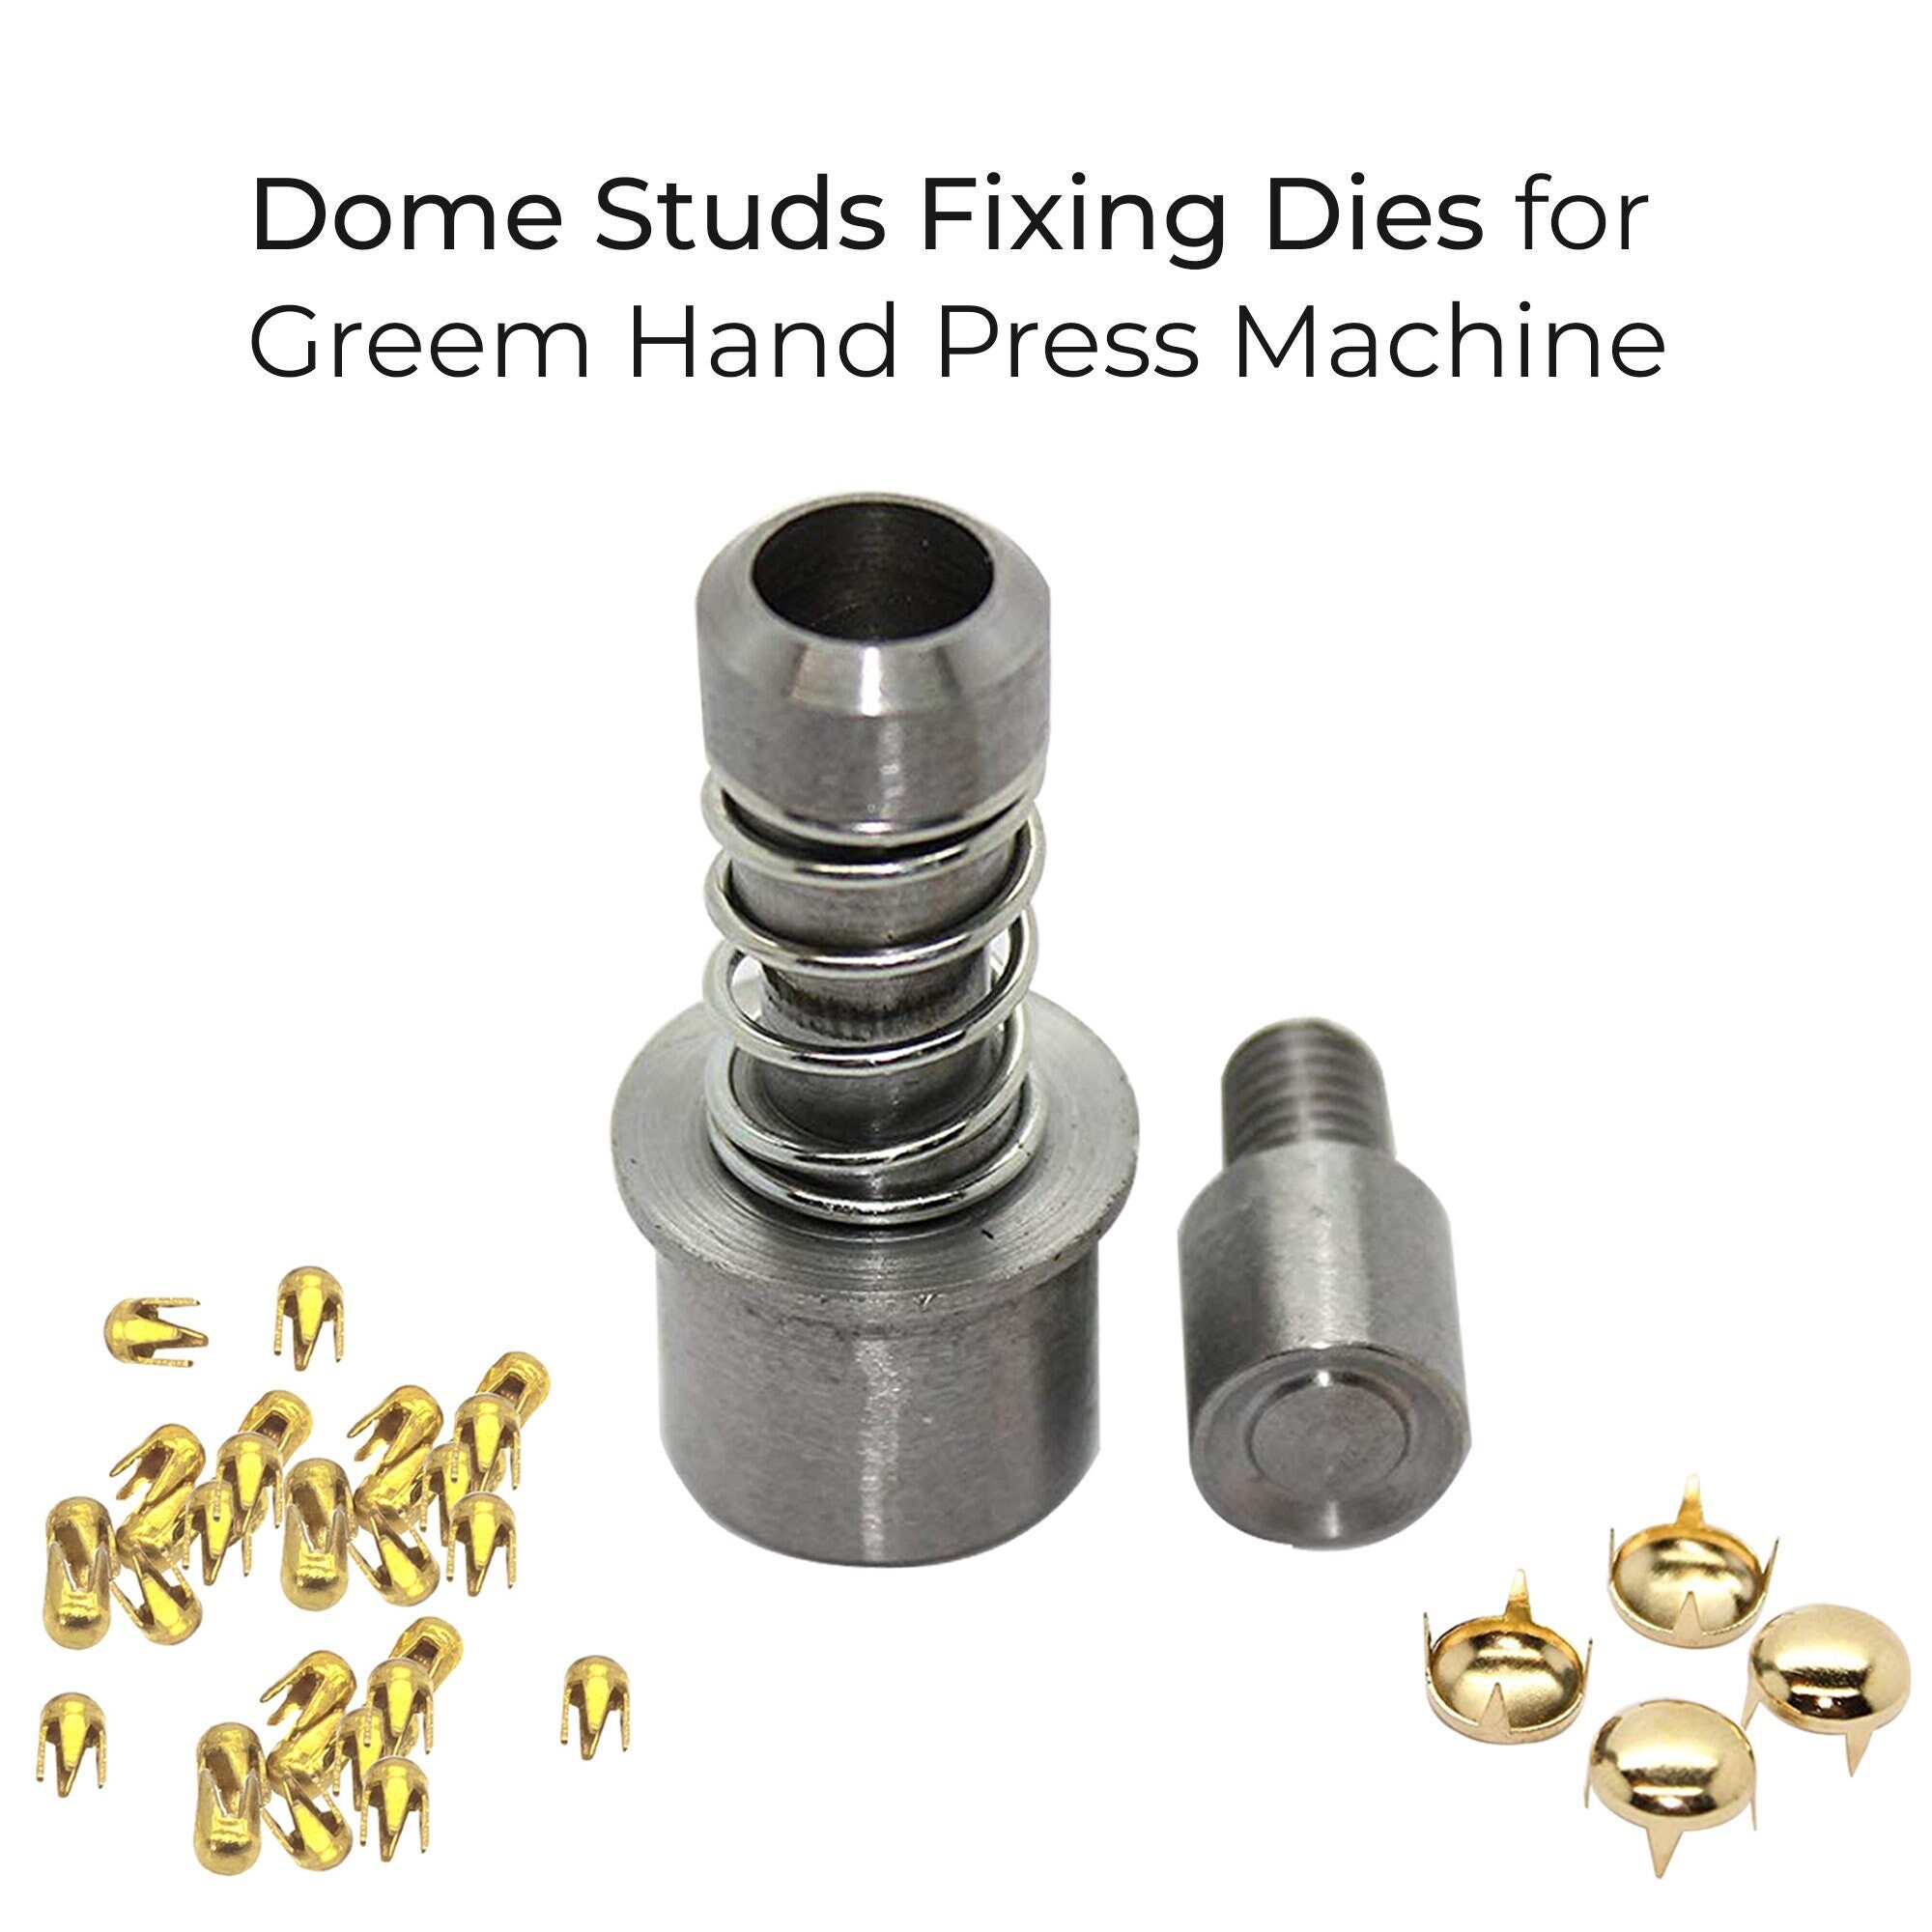 Buy your DOMED-rivet setter fits domed rivet Ø 7 mm online